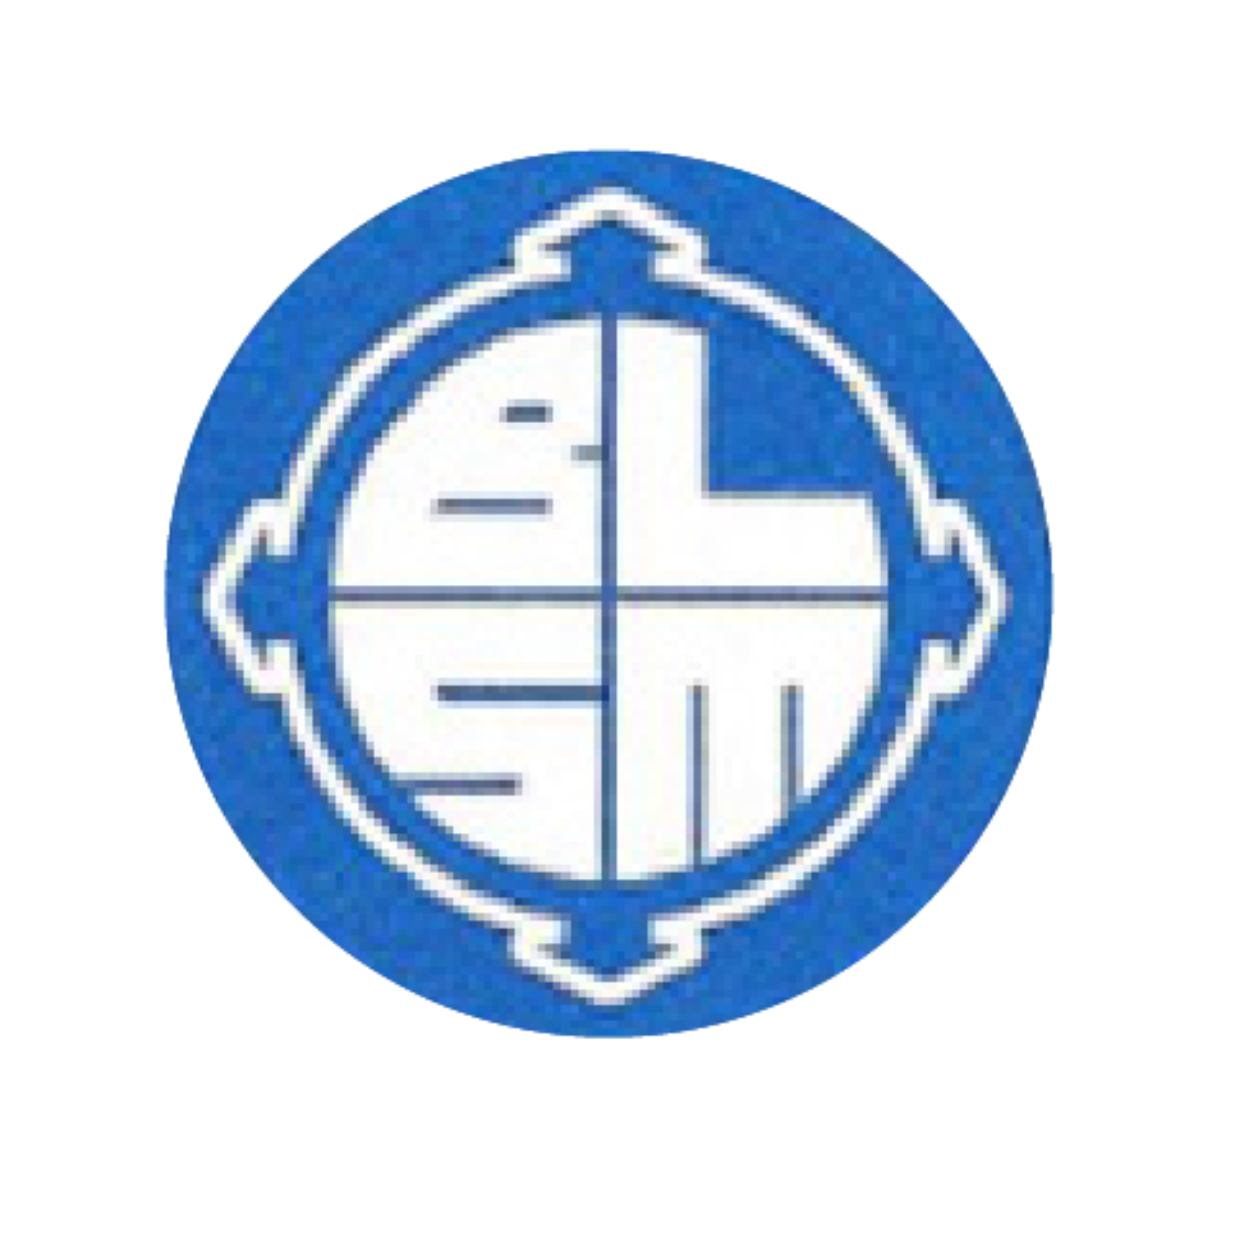 St marys Northants logo.jpg